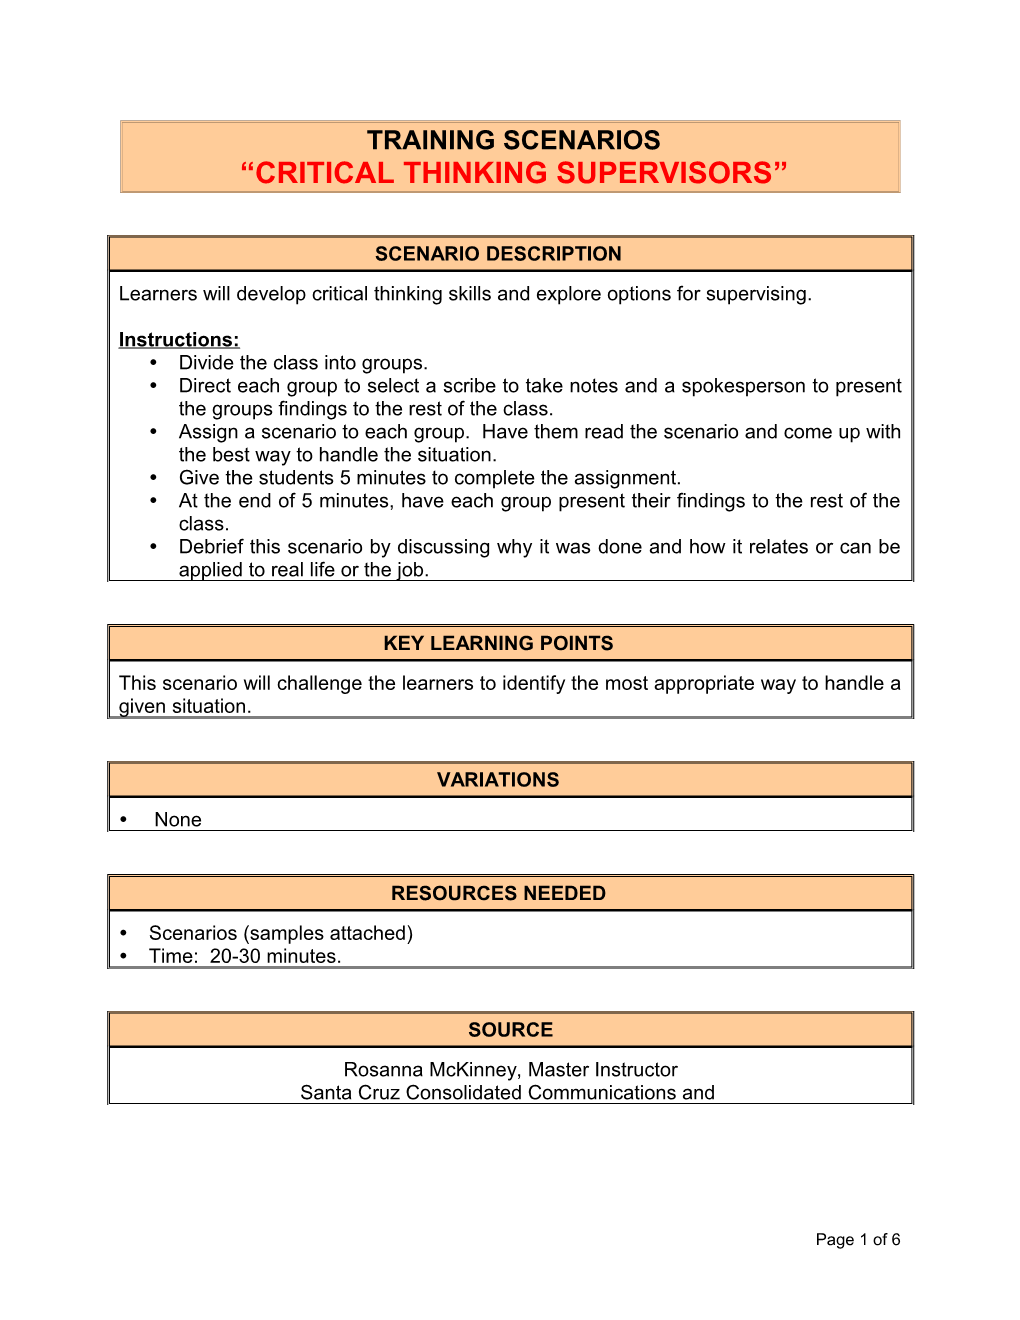 Critical Thinking Supervisors